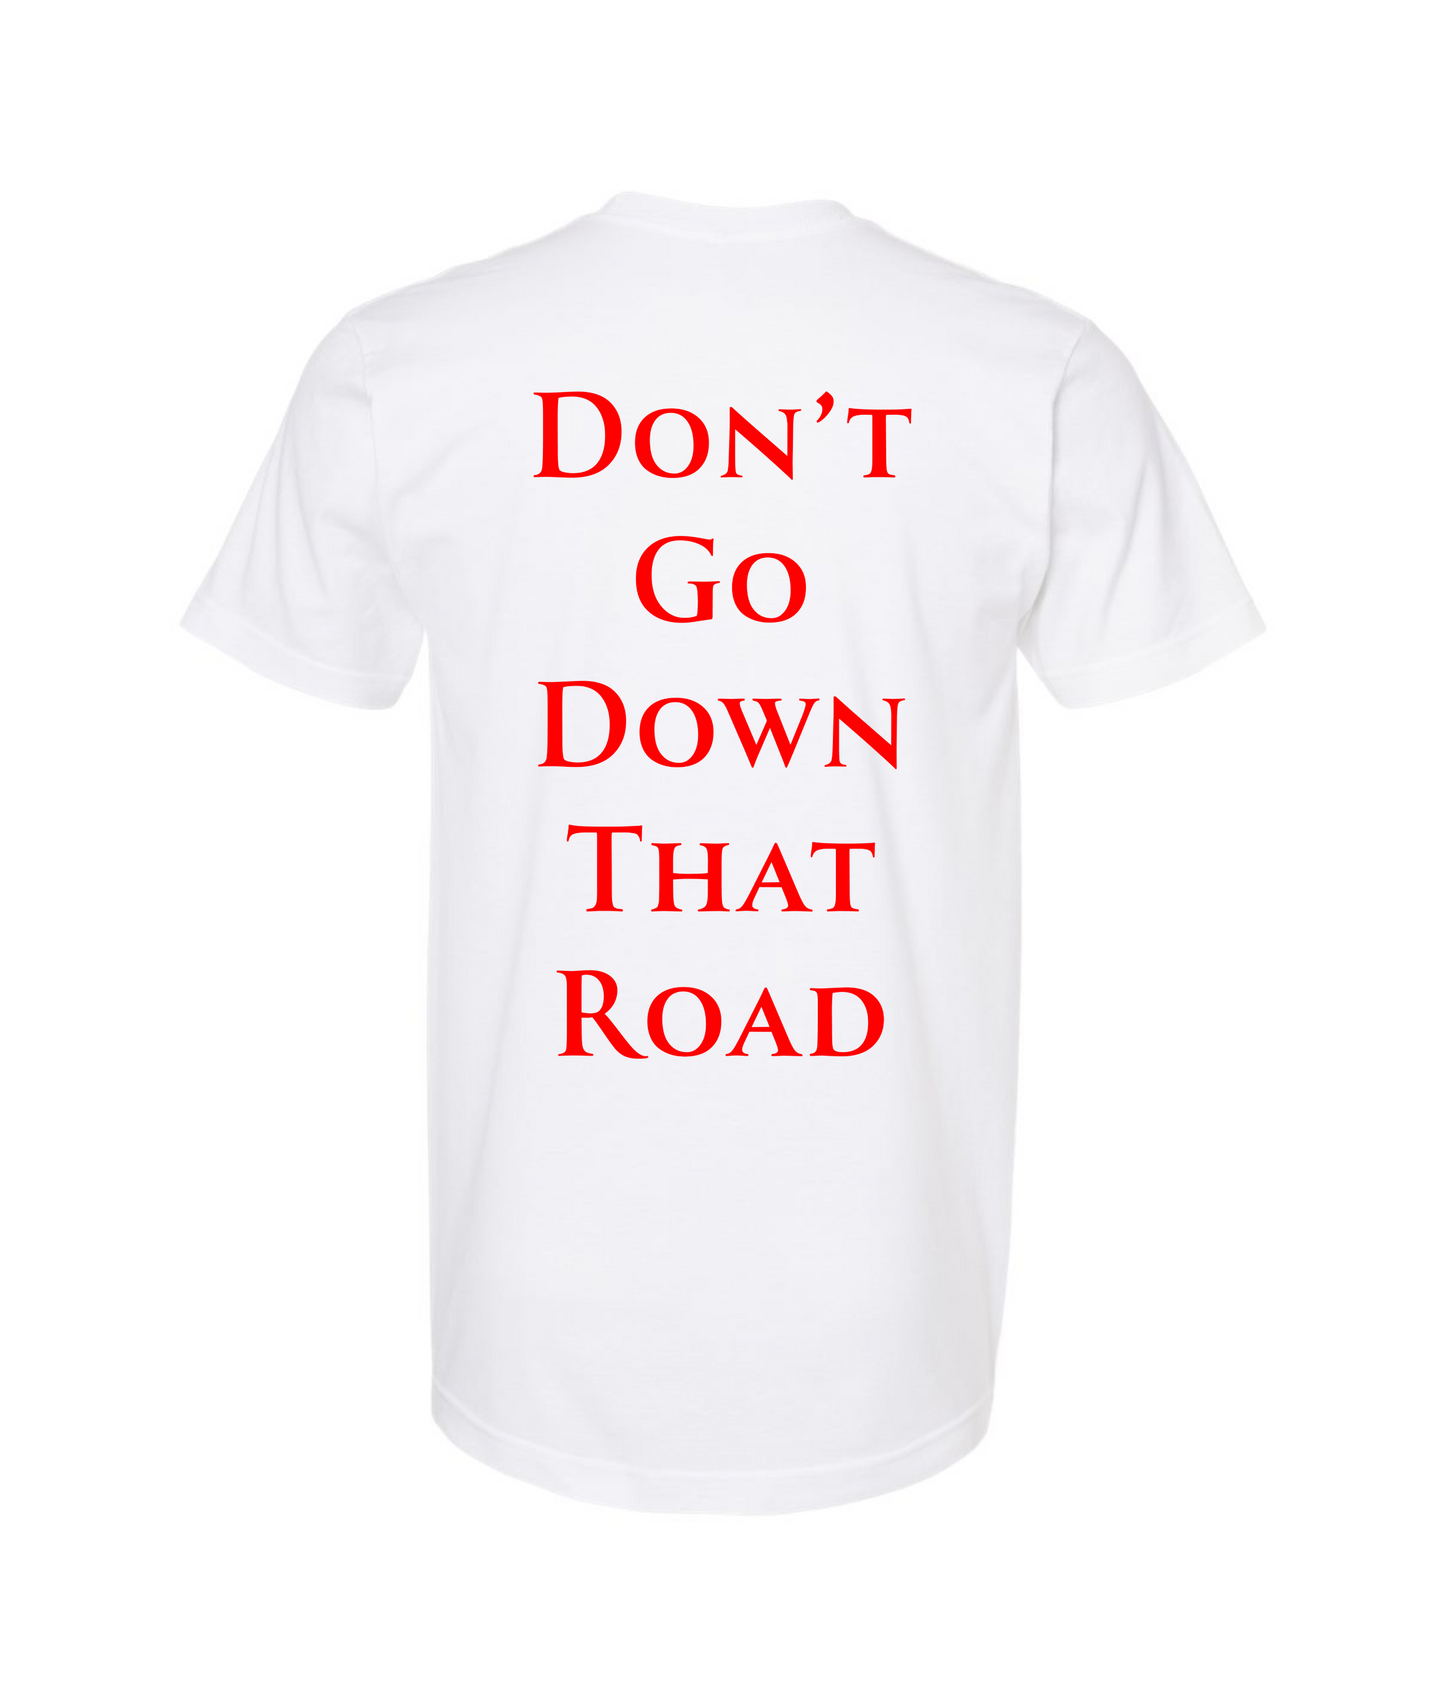 Seglock - DON'T GO DOWN THAT ROAD - White T Shirt